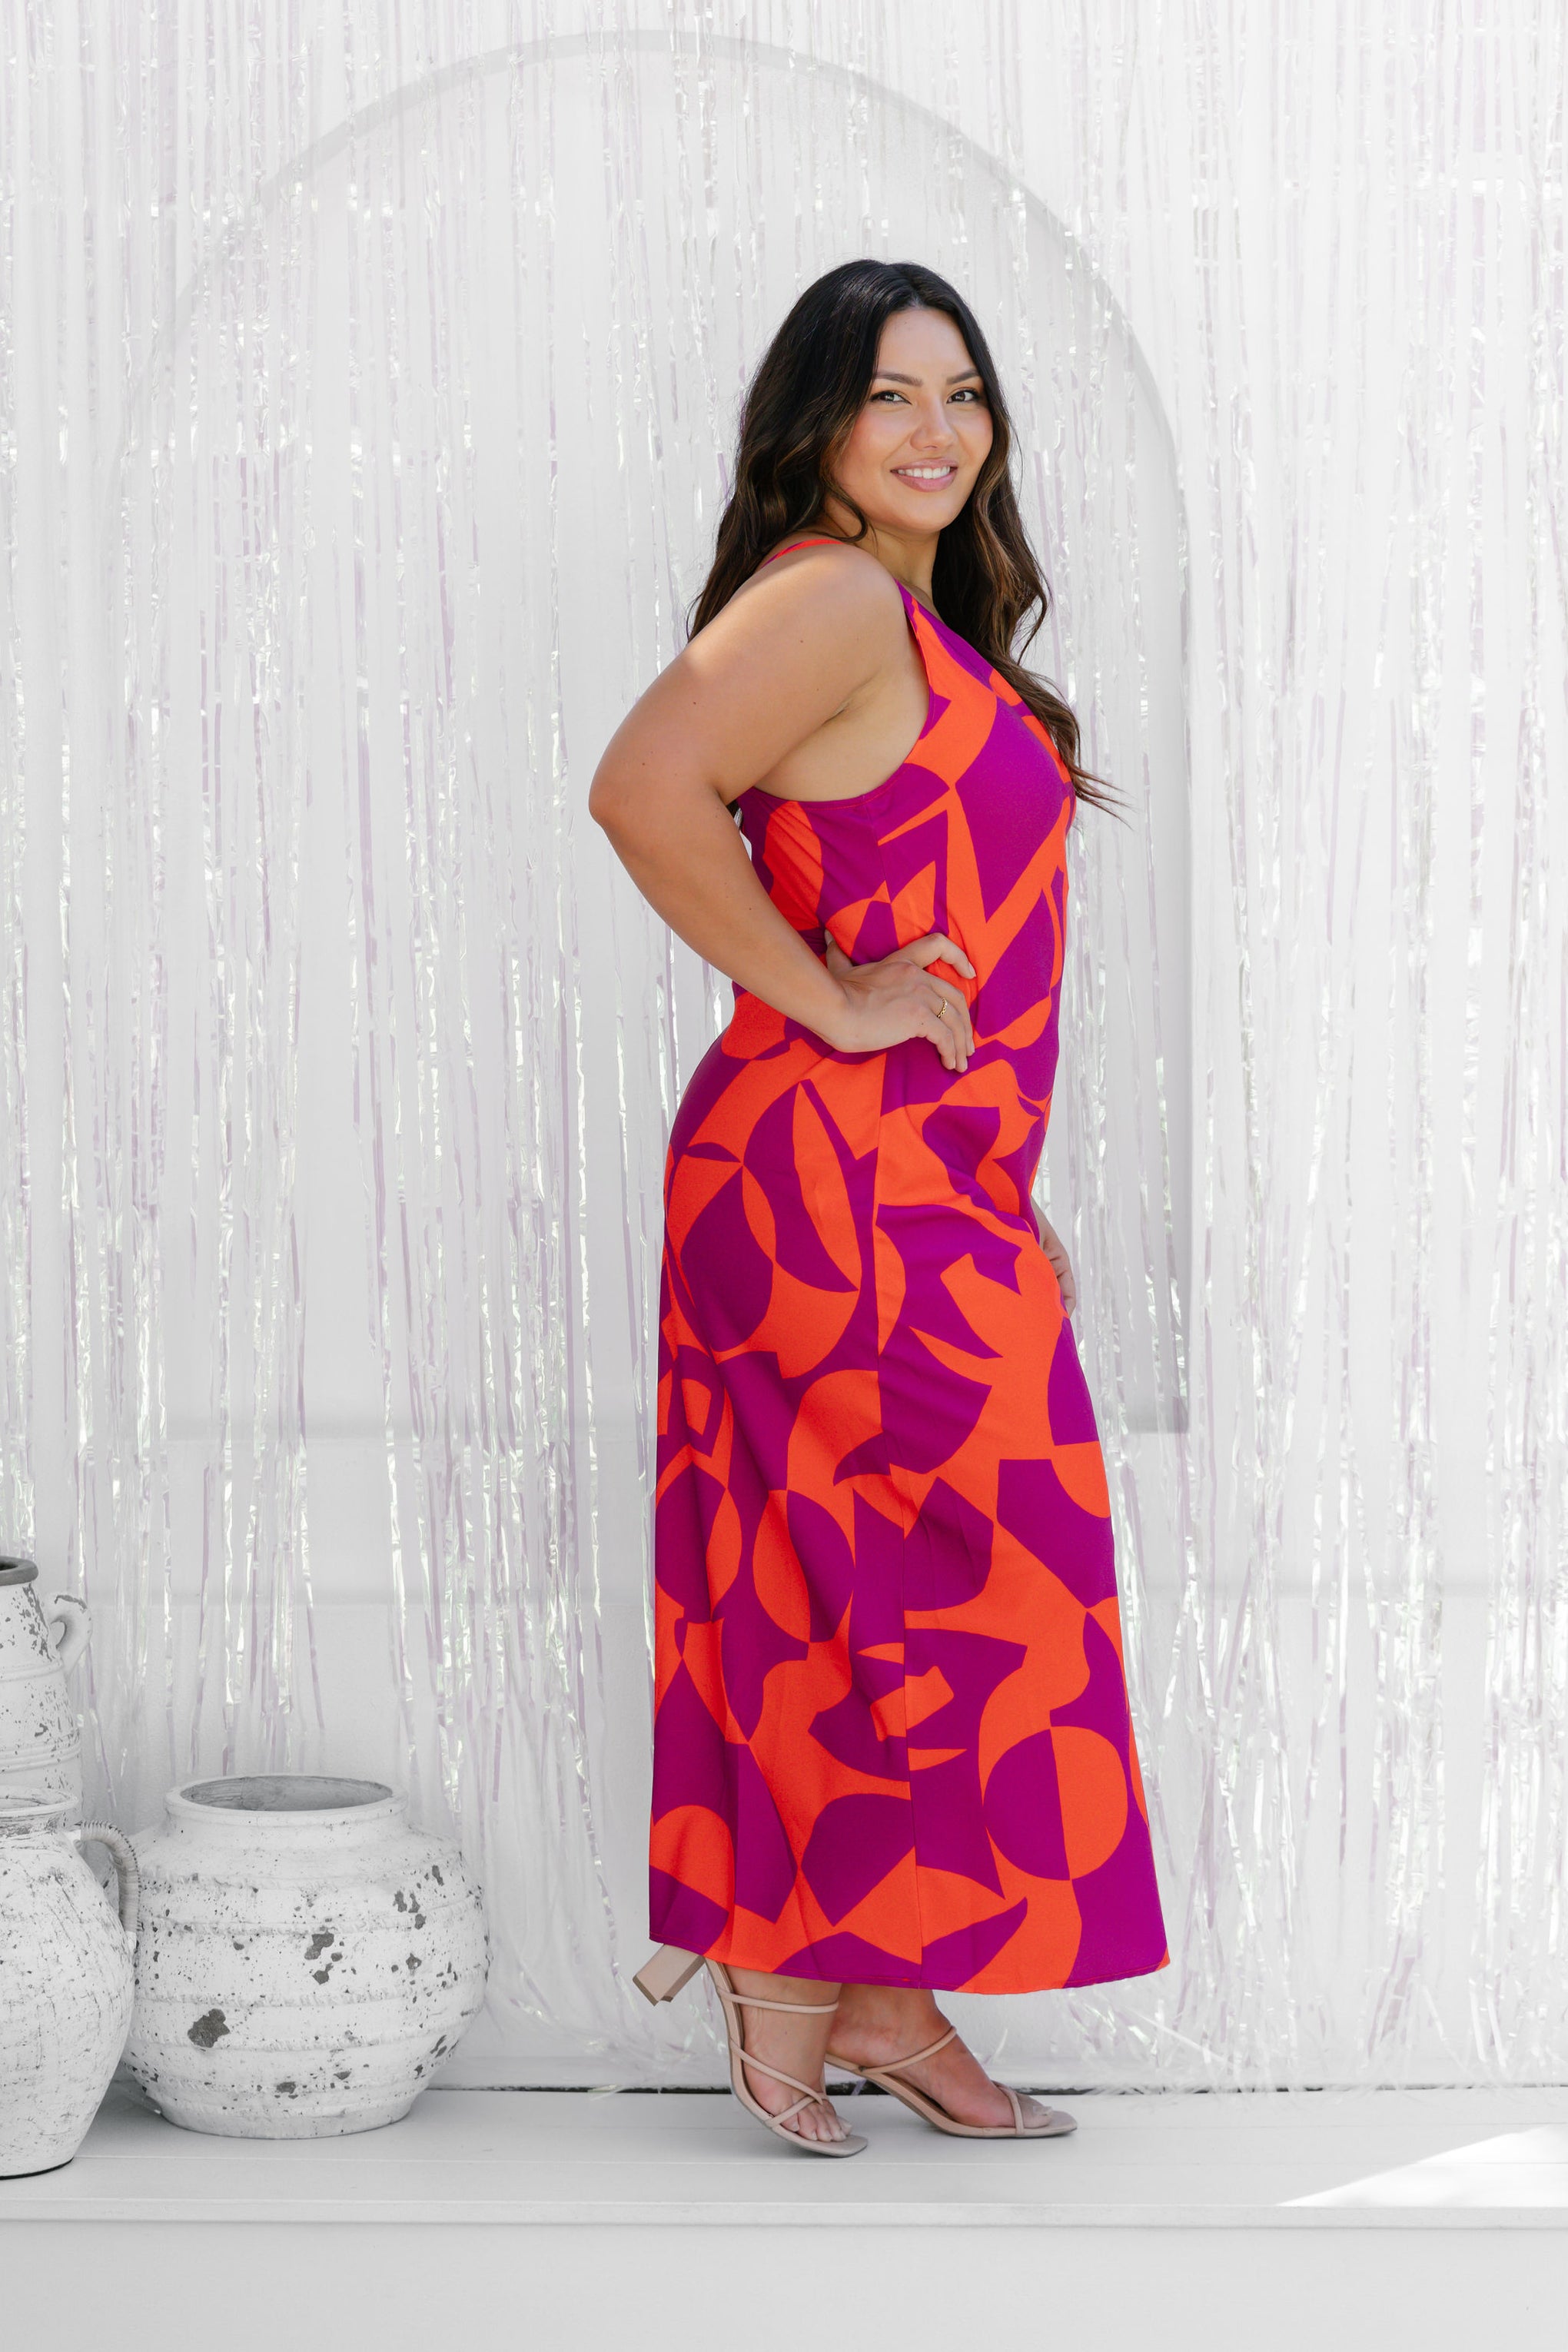 Melrose Crossover Dress in Geo Print